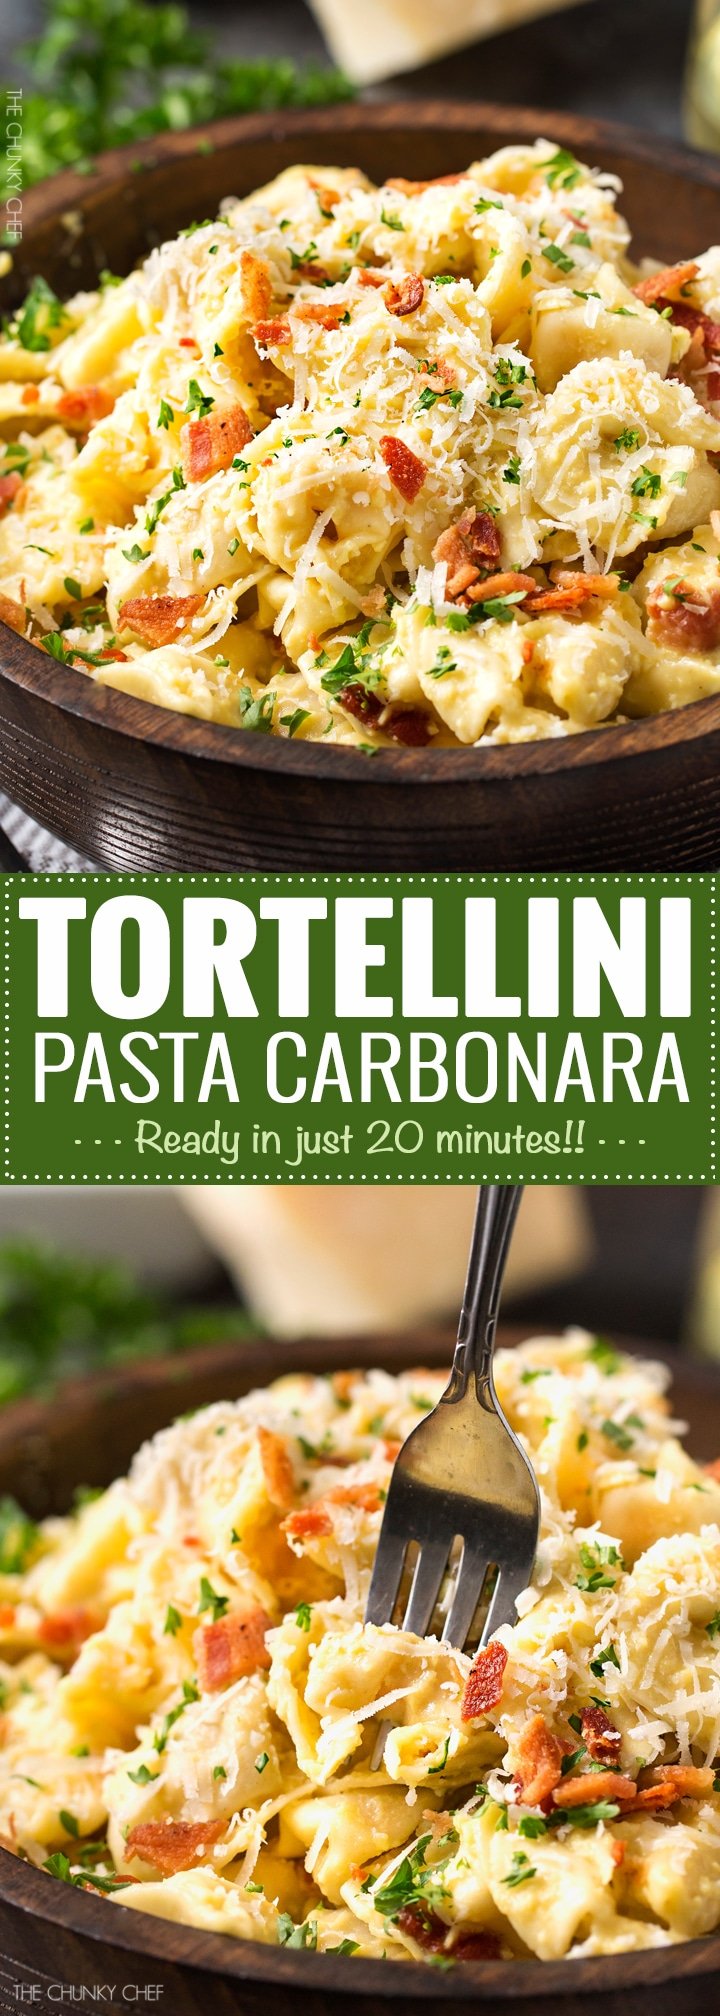 http://www.thechunkychef.com/wp-content/uploads/2017/01/20-Minute-Tortellini-Pasta-Carbonara-long.jpg